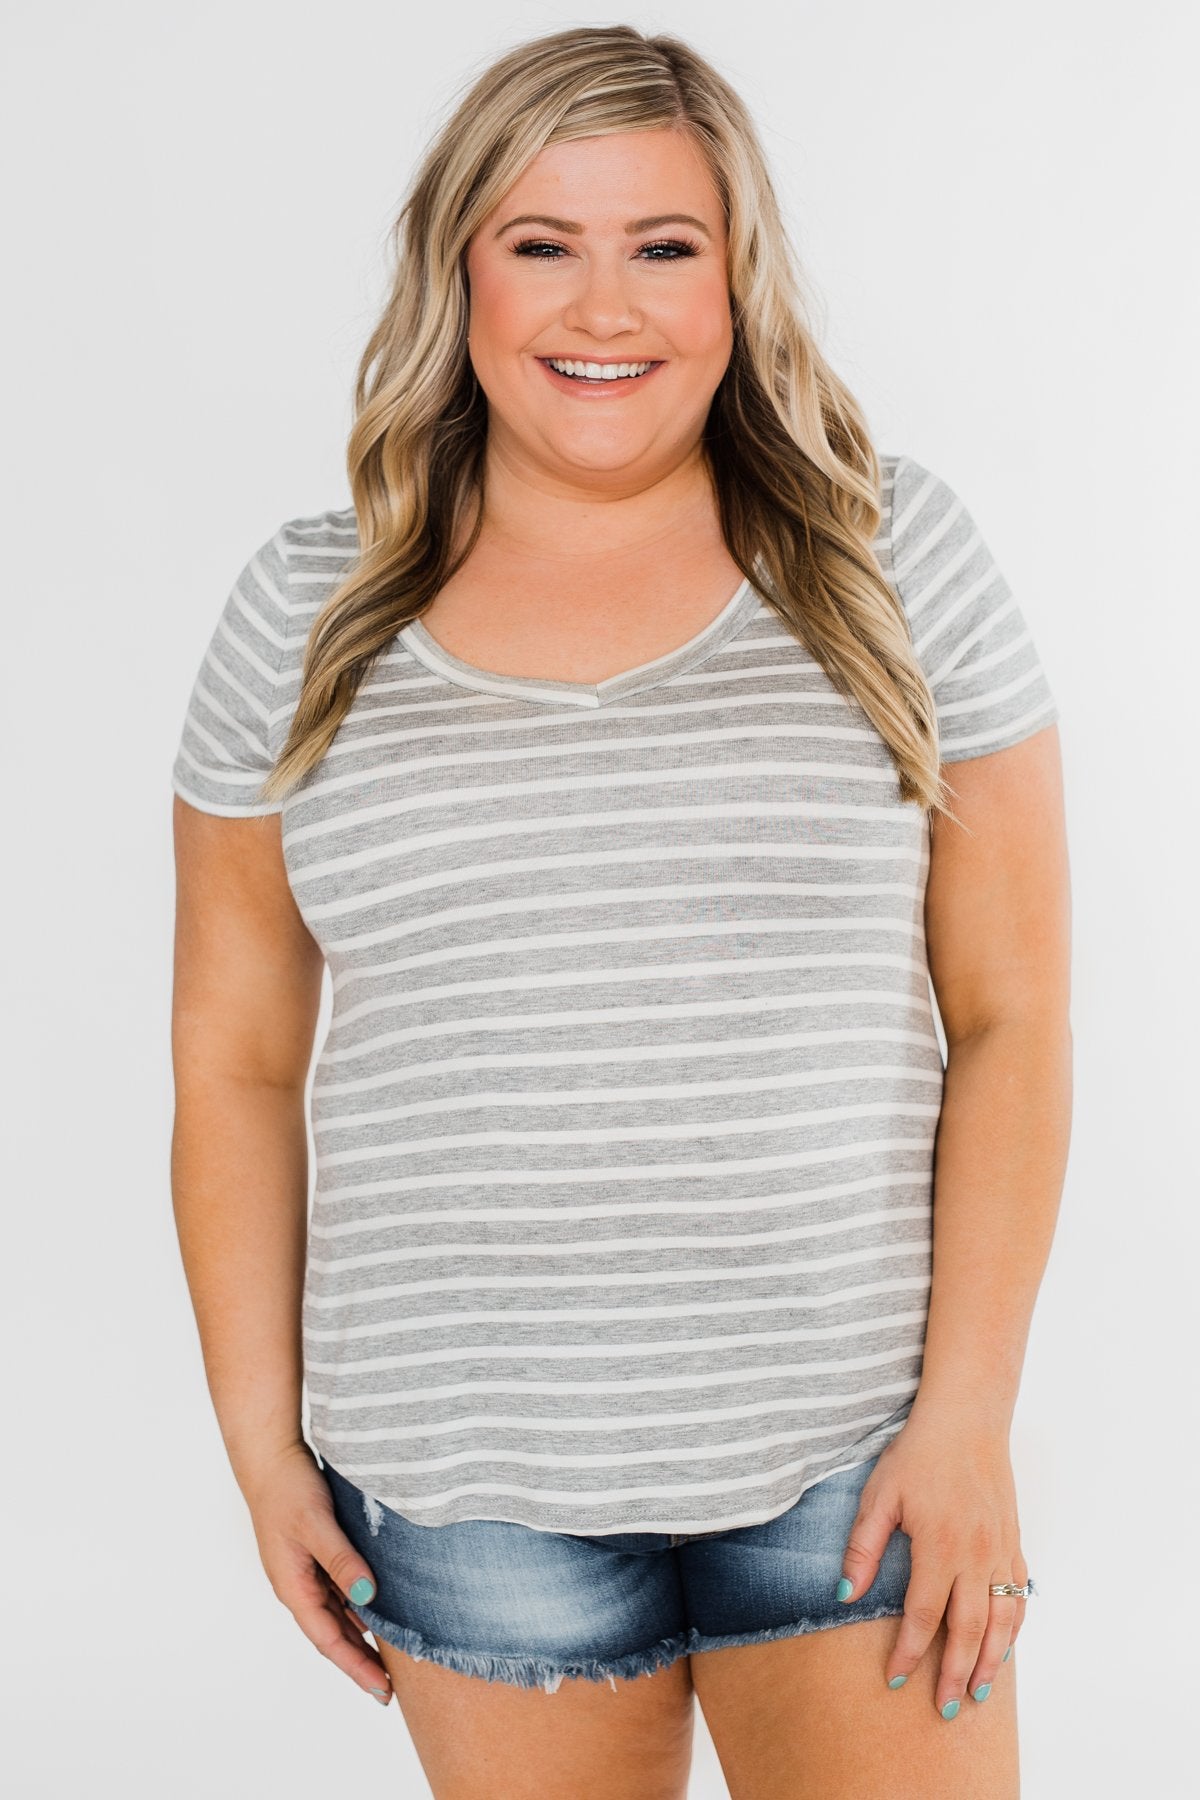 Heather Grey & White Striped V-Neck Top